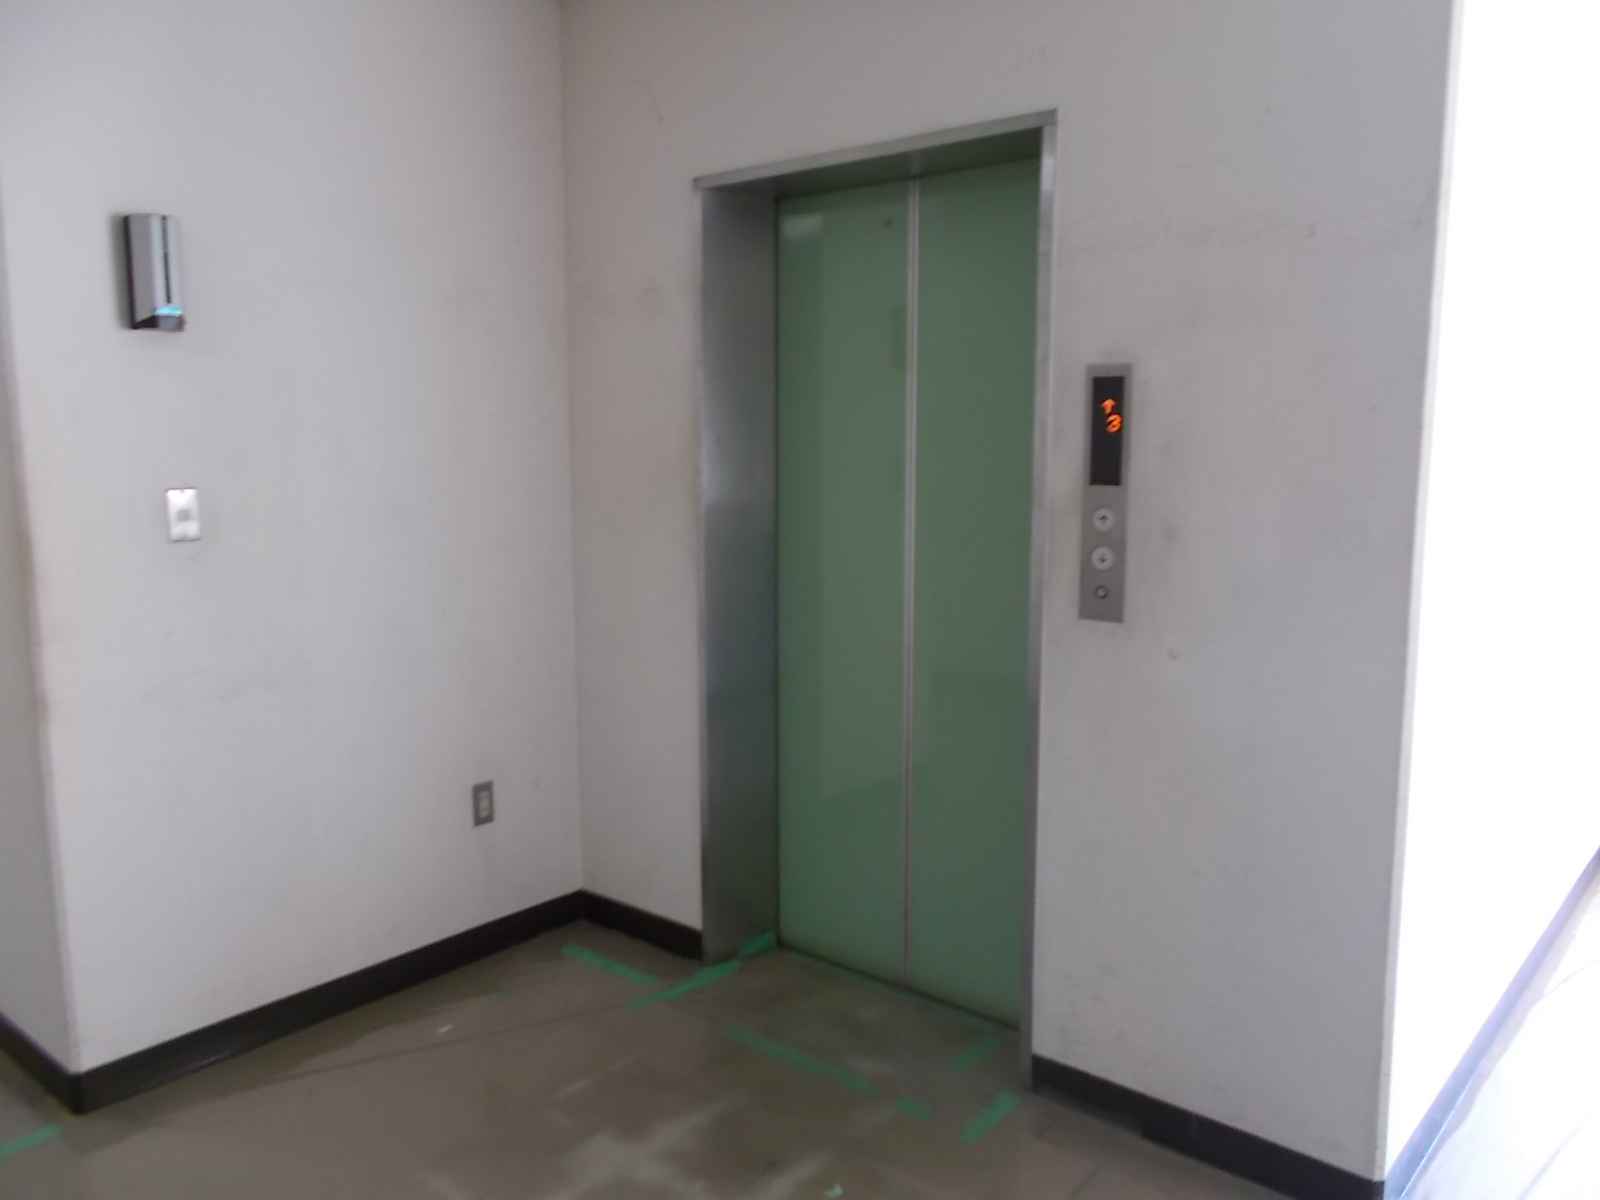 4_elevator.JPG